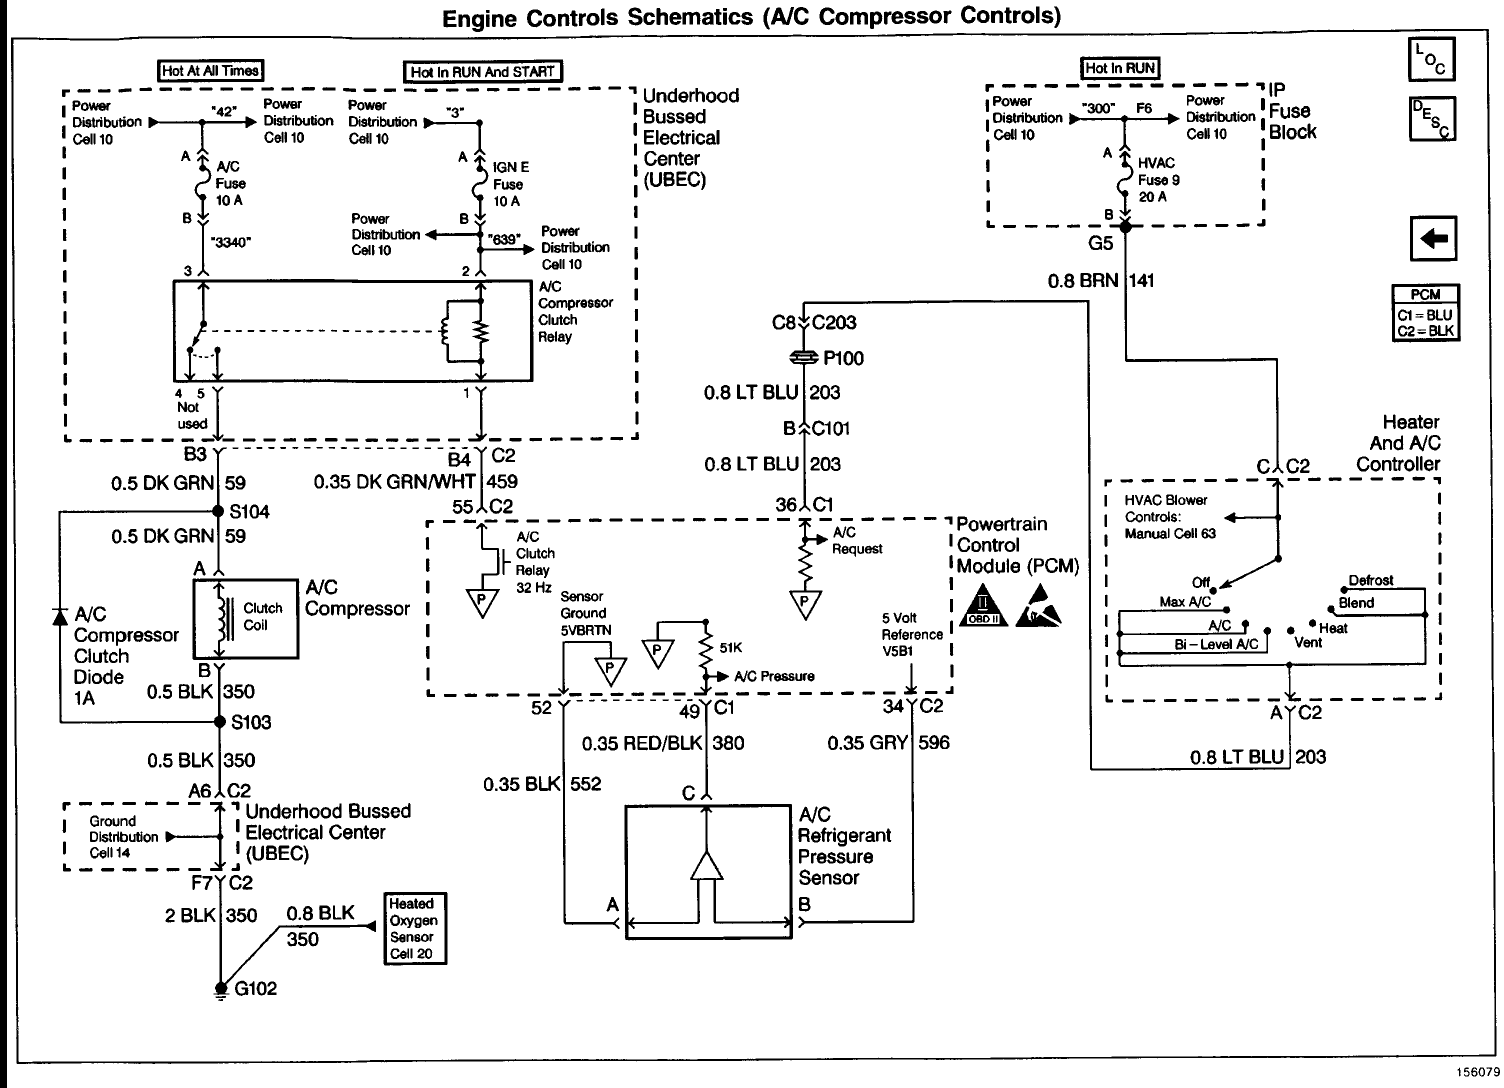 Wiring Diagram 96 Chevy S10 - Wiring Diagram